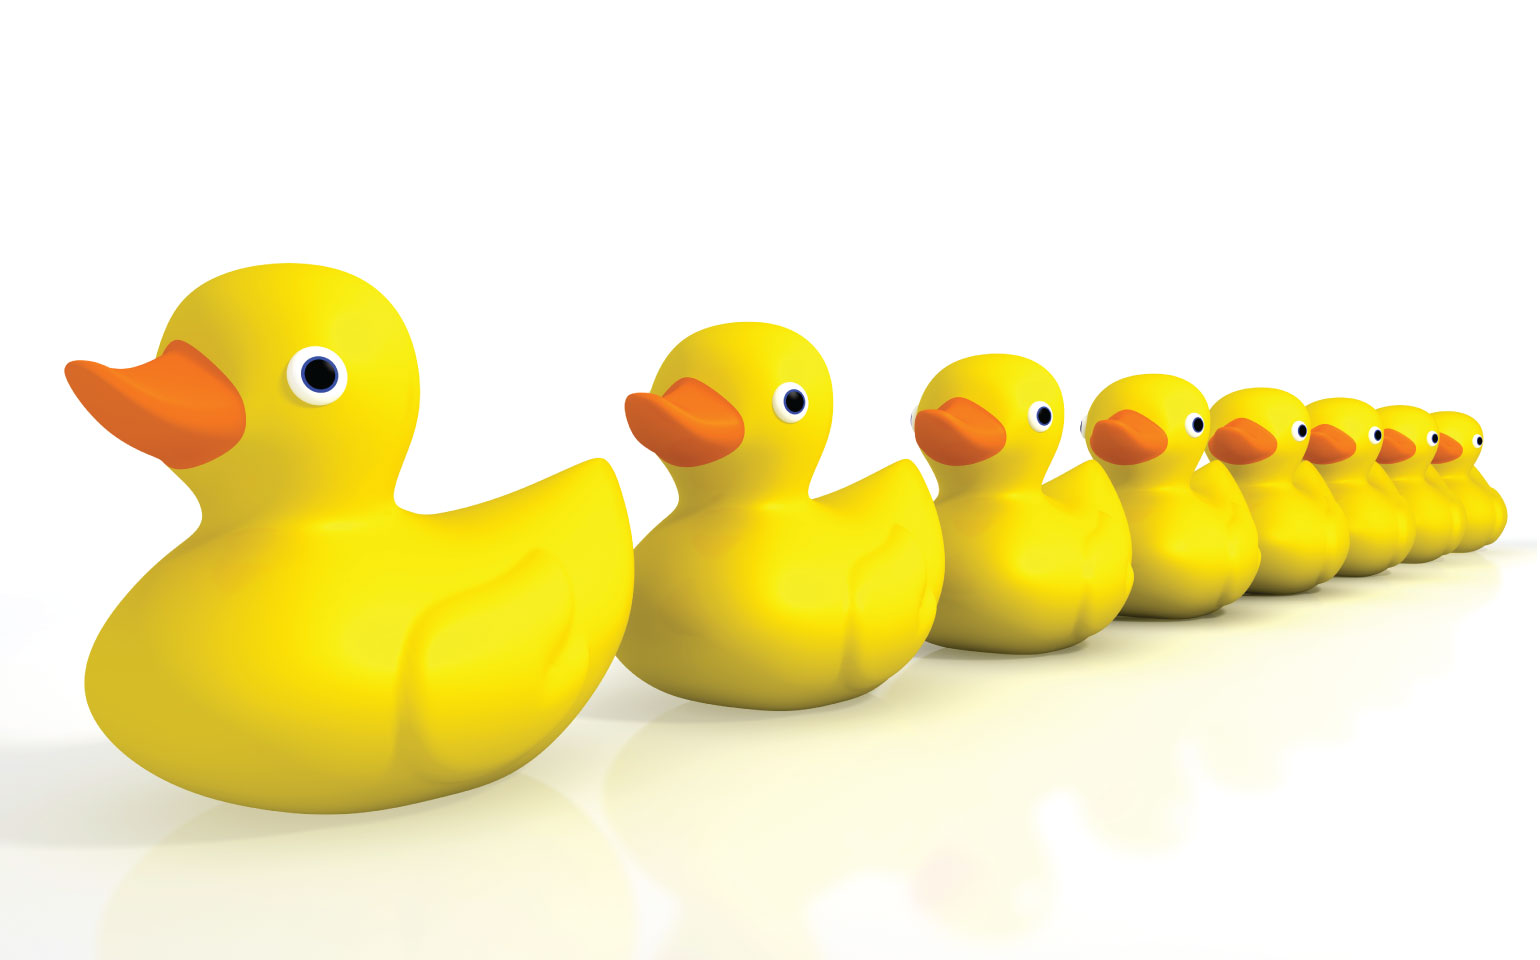 Row of rubber ducks